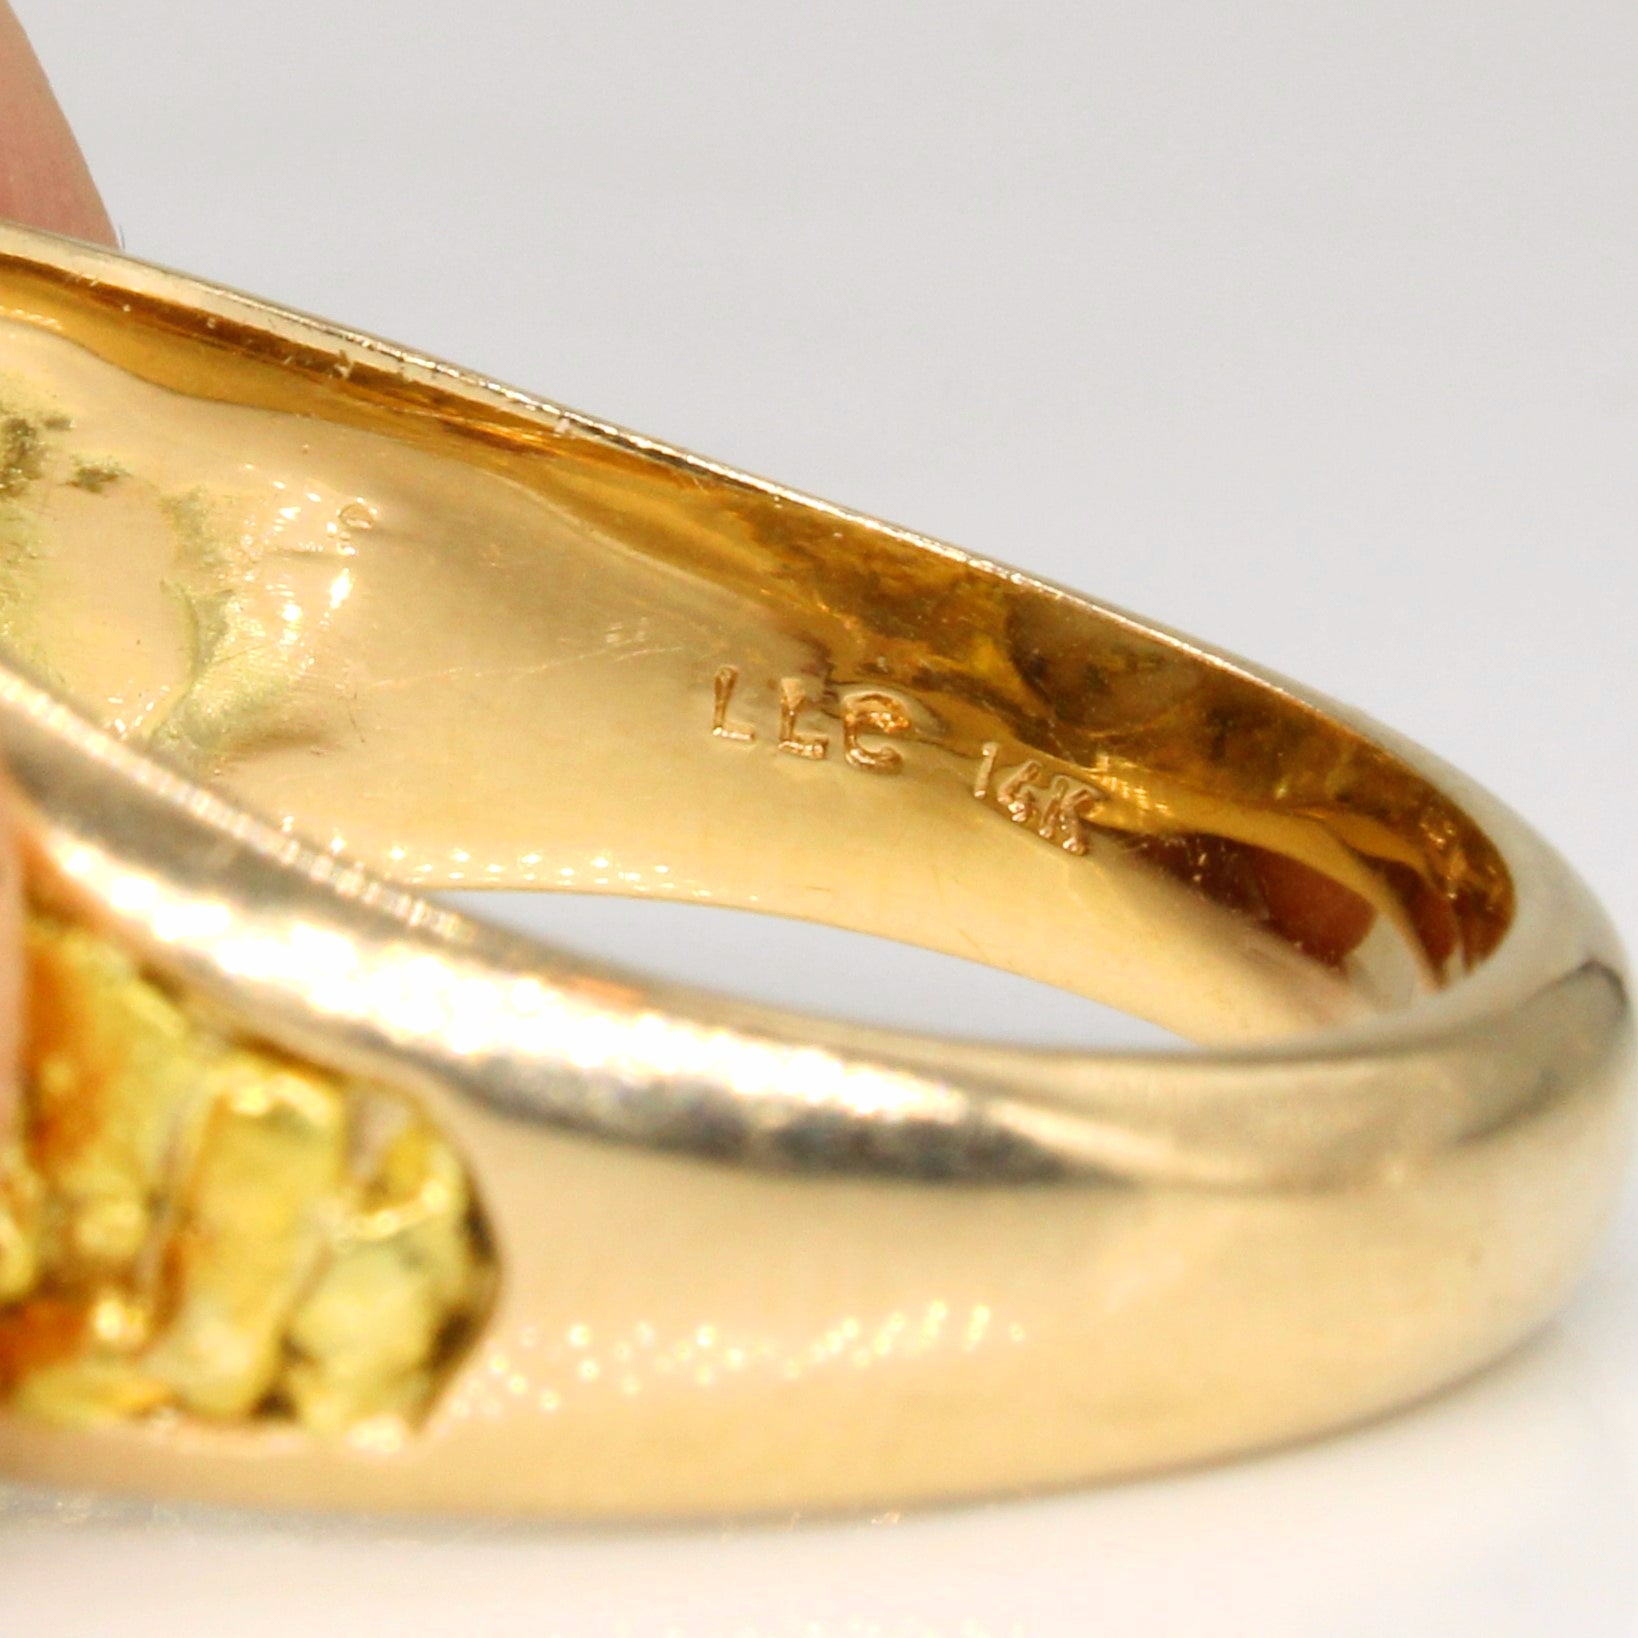 Gold Veined Quartz & Nugget Ring | 3.50ct | SZ 10.75 |